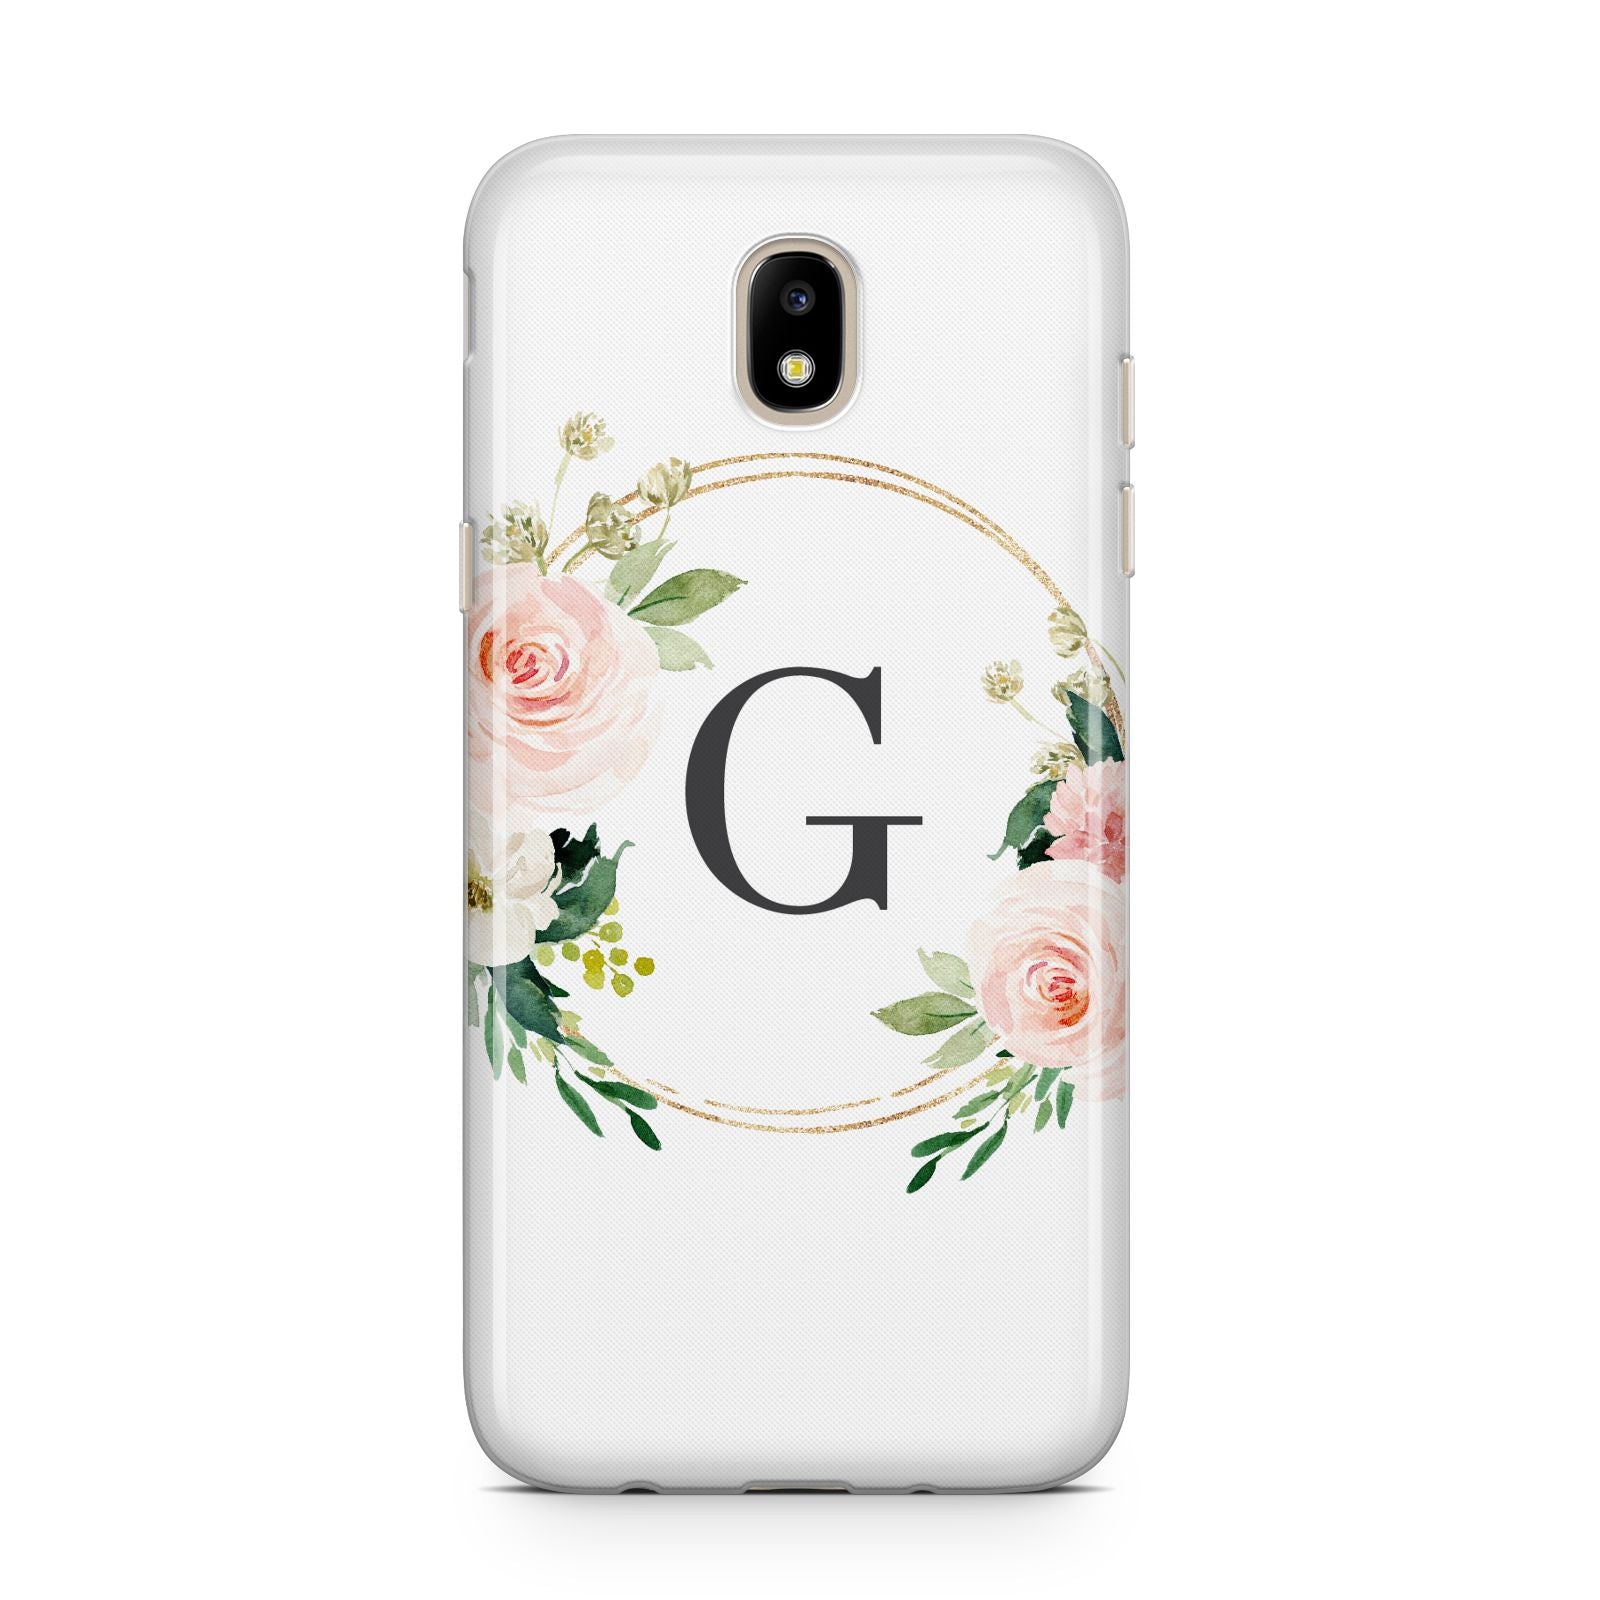 Personalised Blush Floral Wreath Samsung J5 2017 Case